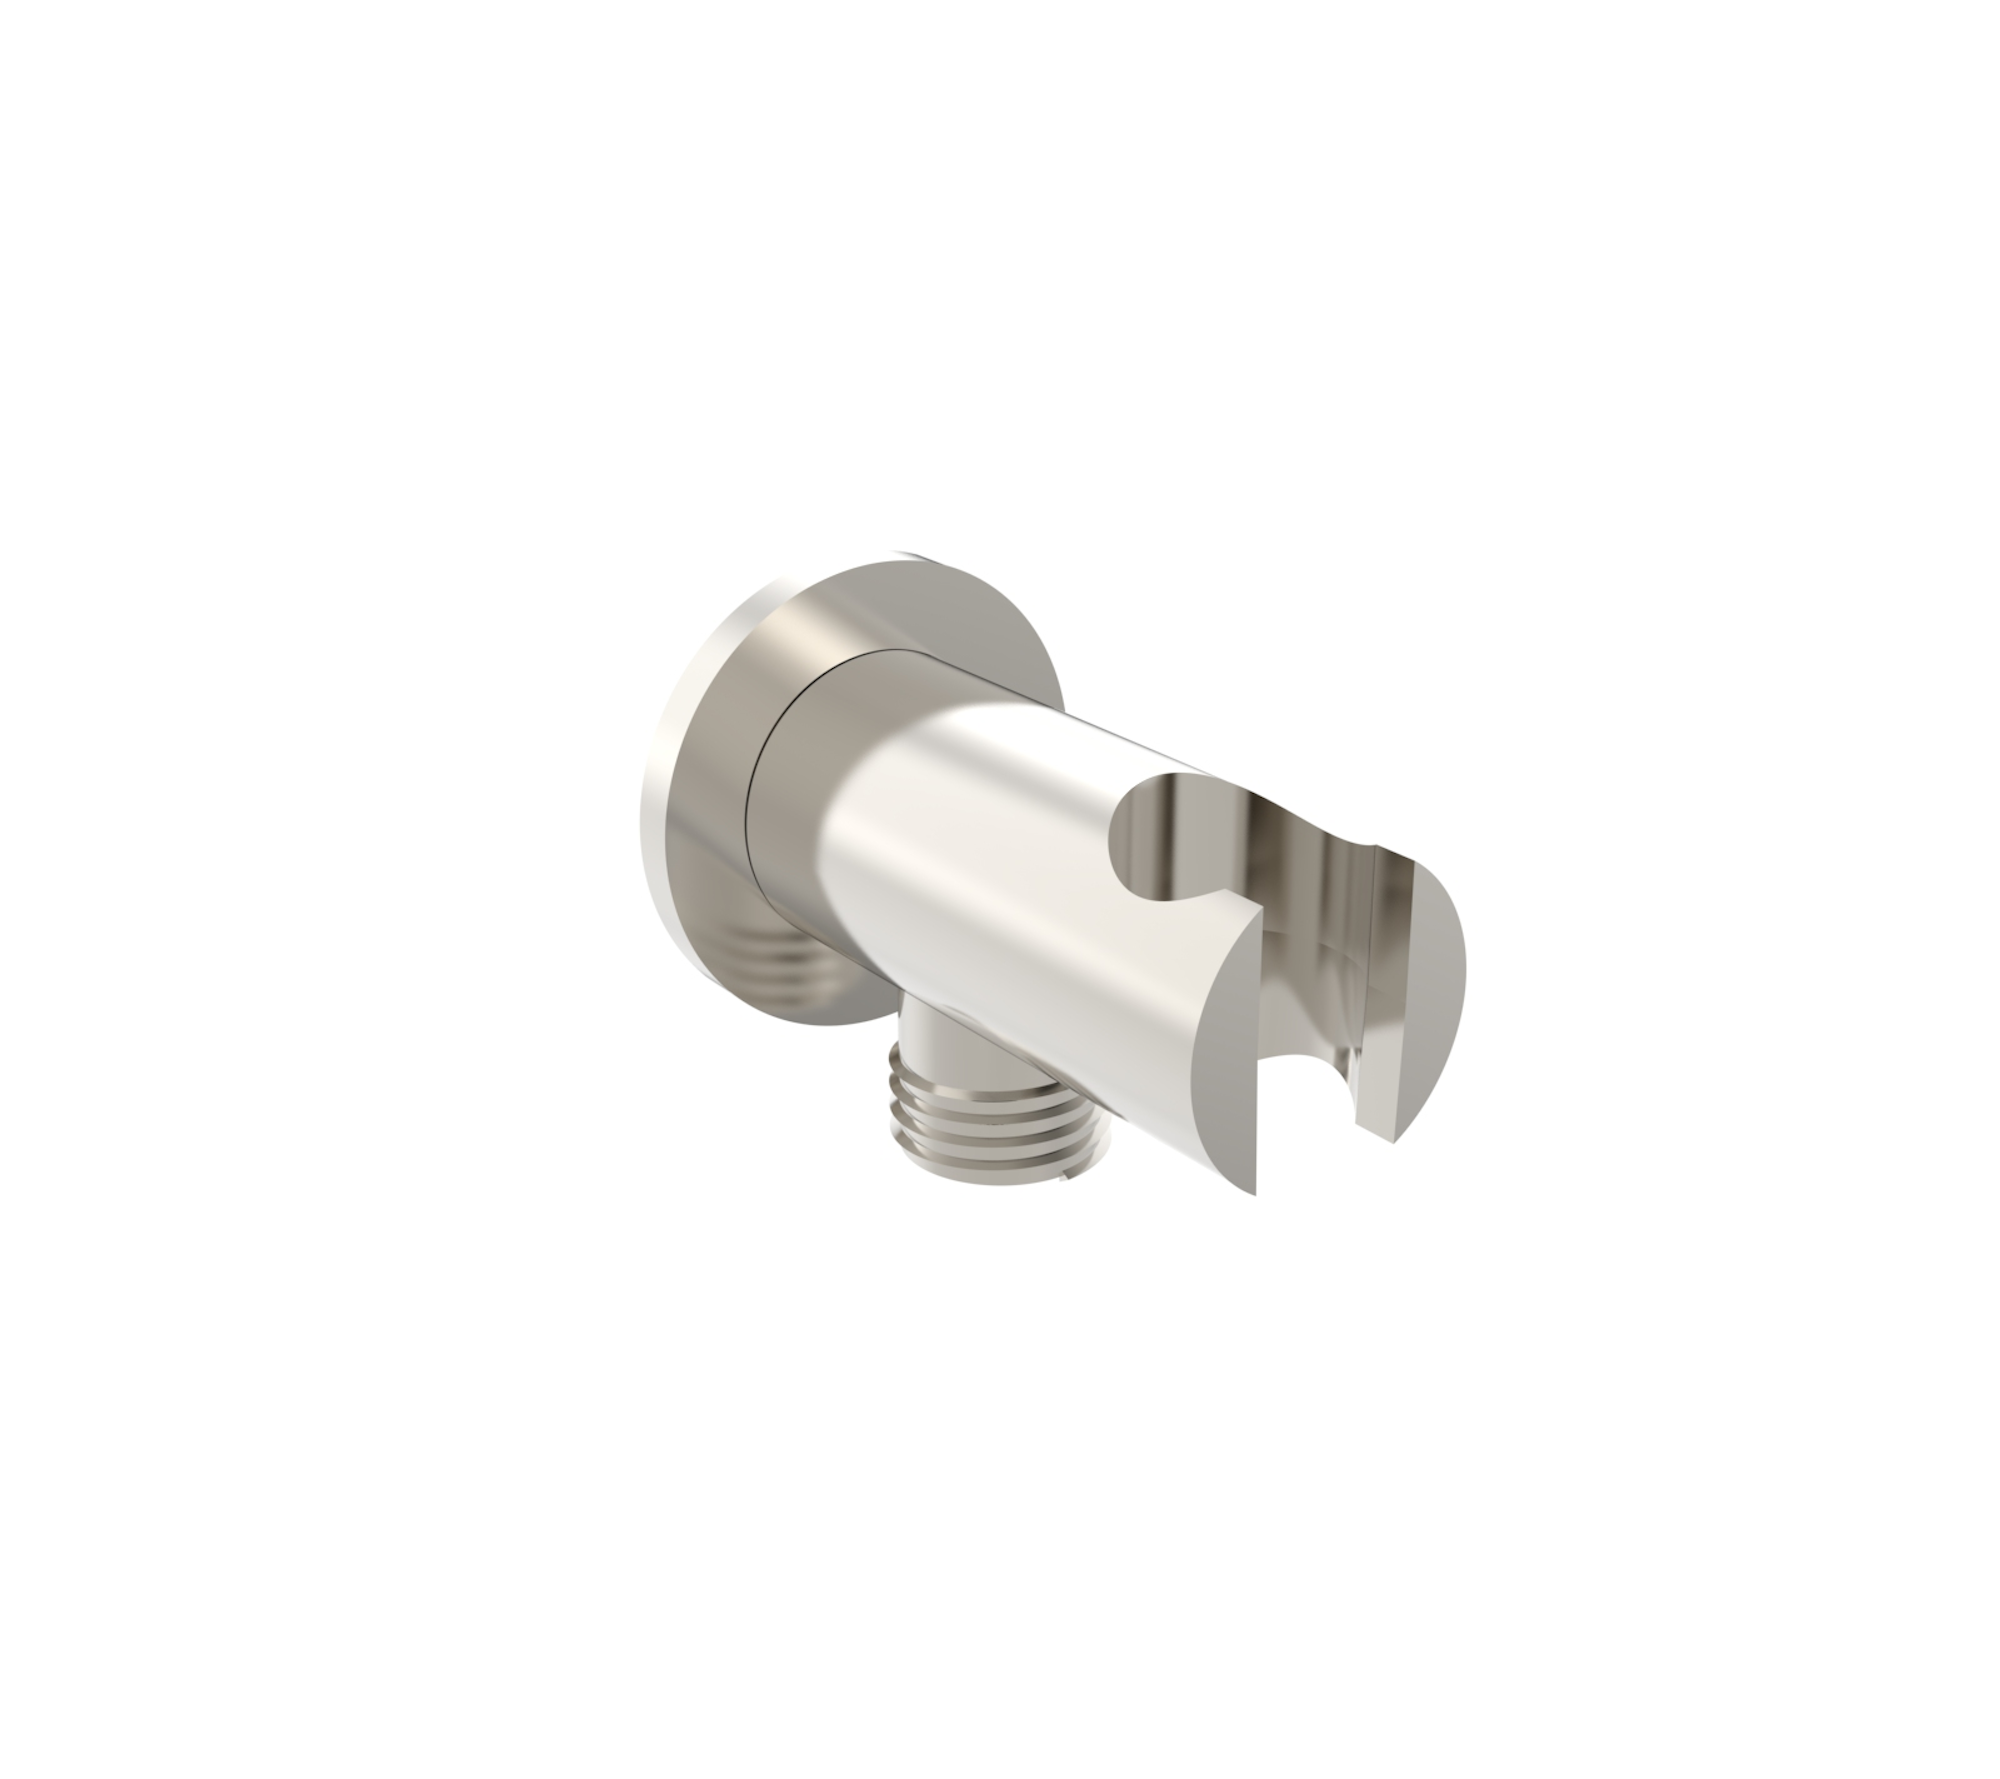 COS round shower outlet elbow & holder - Brushed Nickel